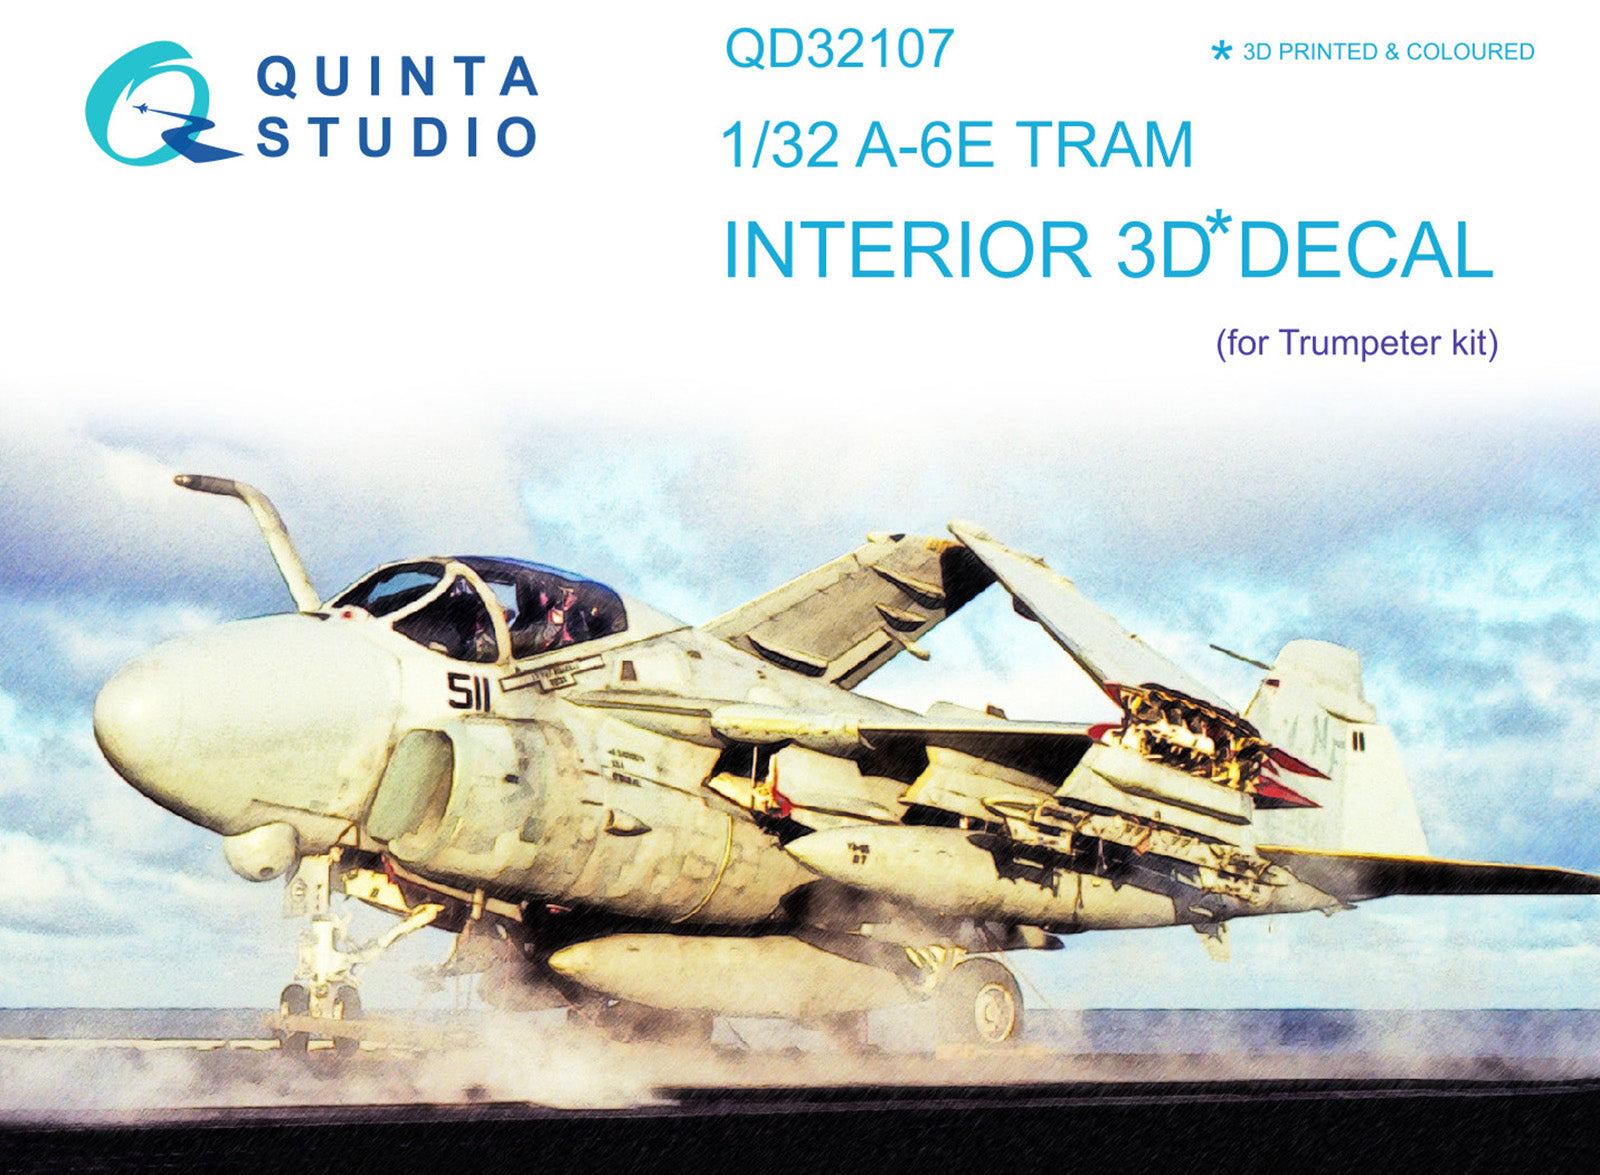 Quinta Studio - 1/32 A-6E TRAM intruder QD32107 for Trumpeter kit